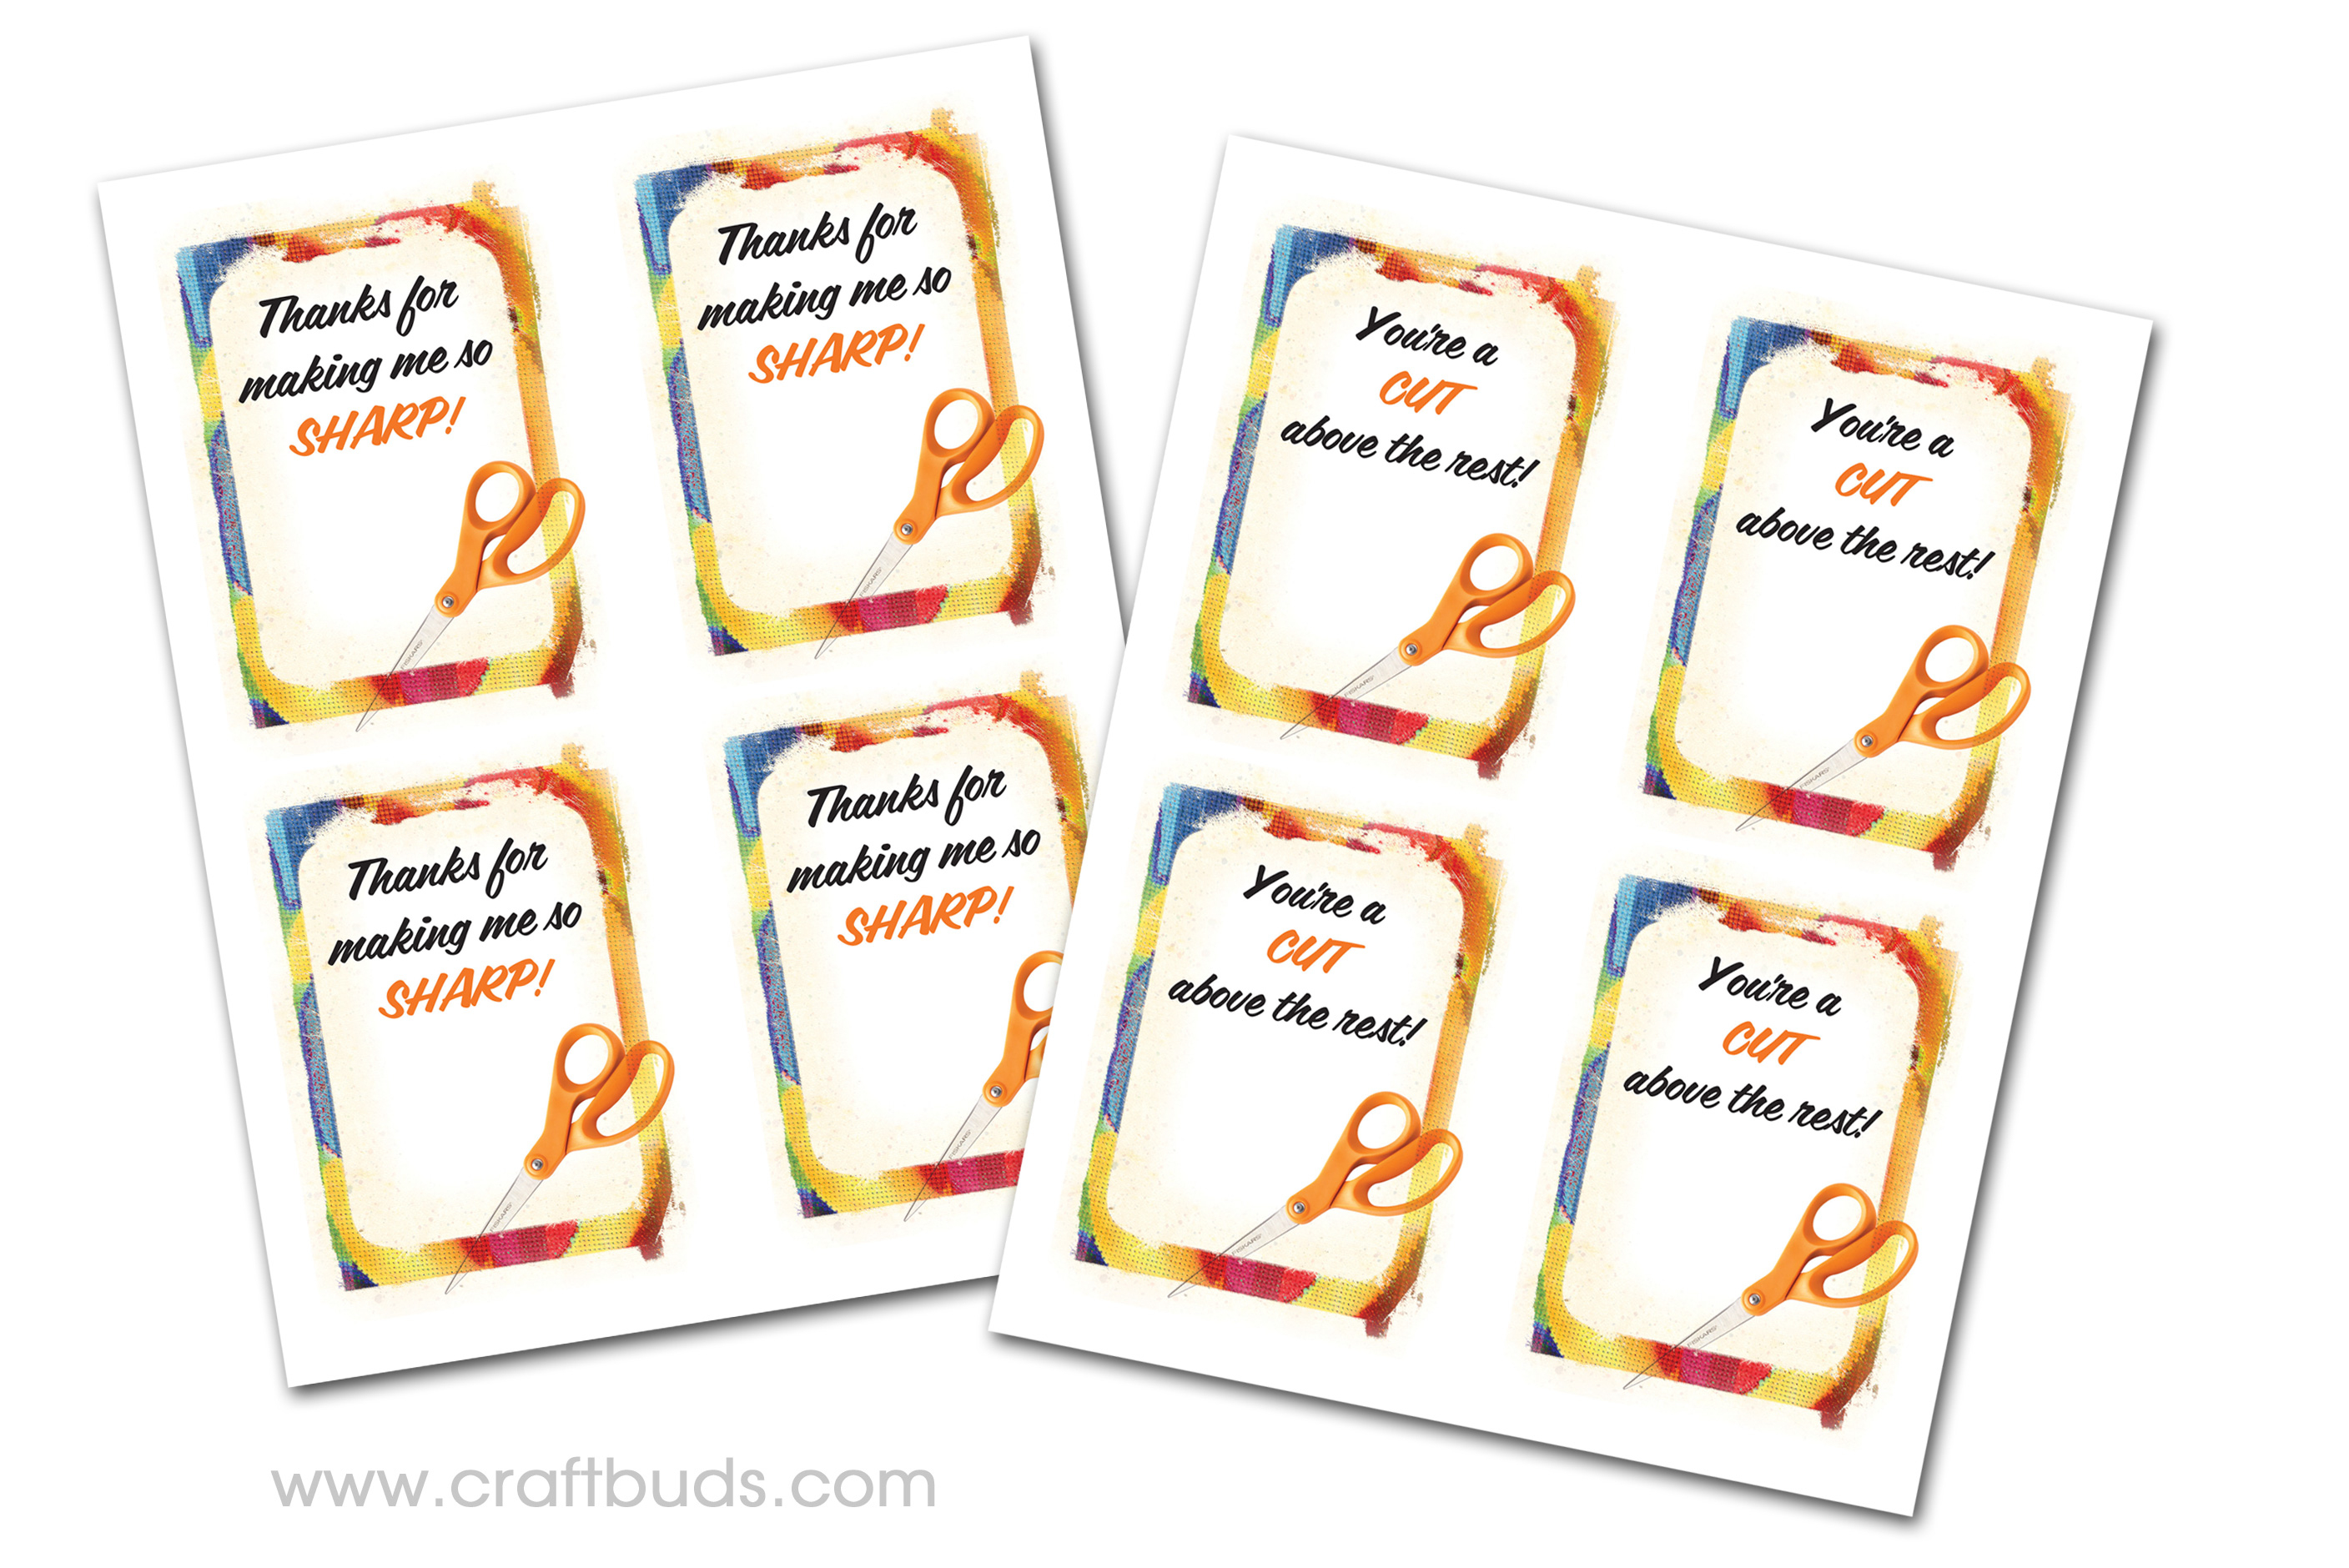 Fast Teacher Appreciation Gift! (+ Free Printable) | Craft Buds - Free Printable Tags For Teacher Appreciation